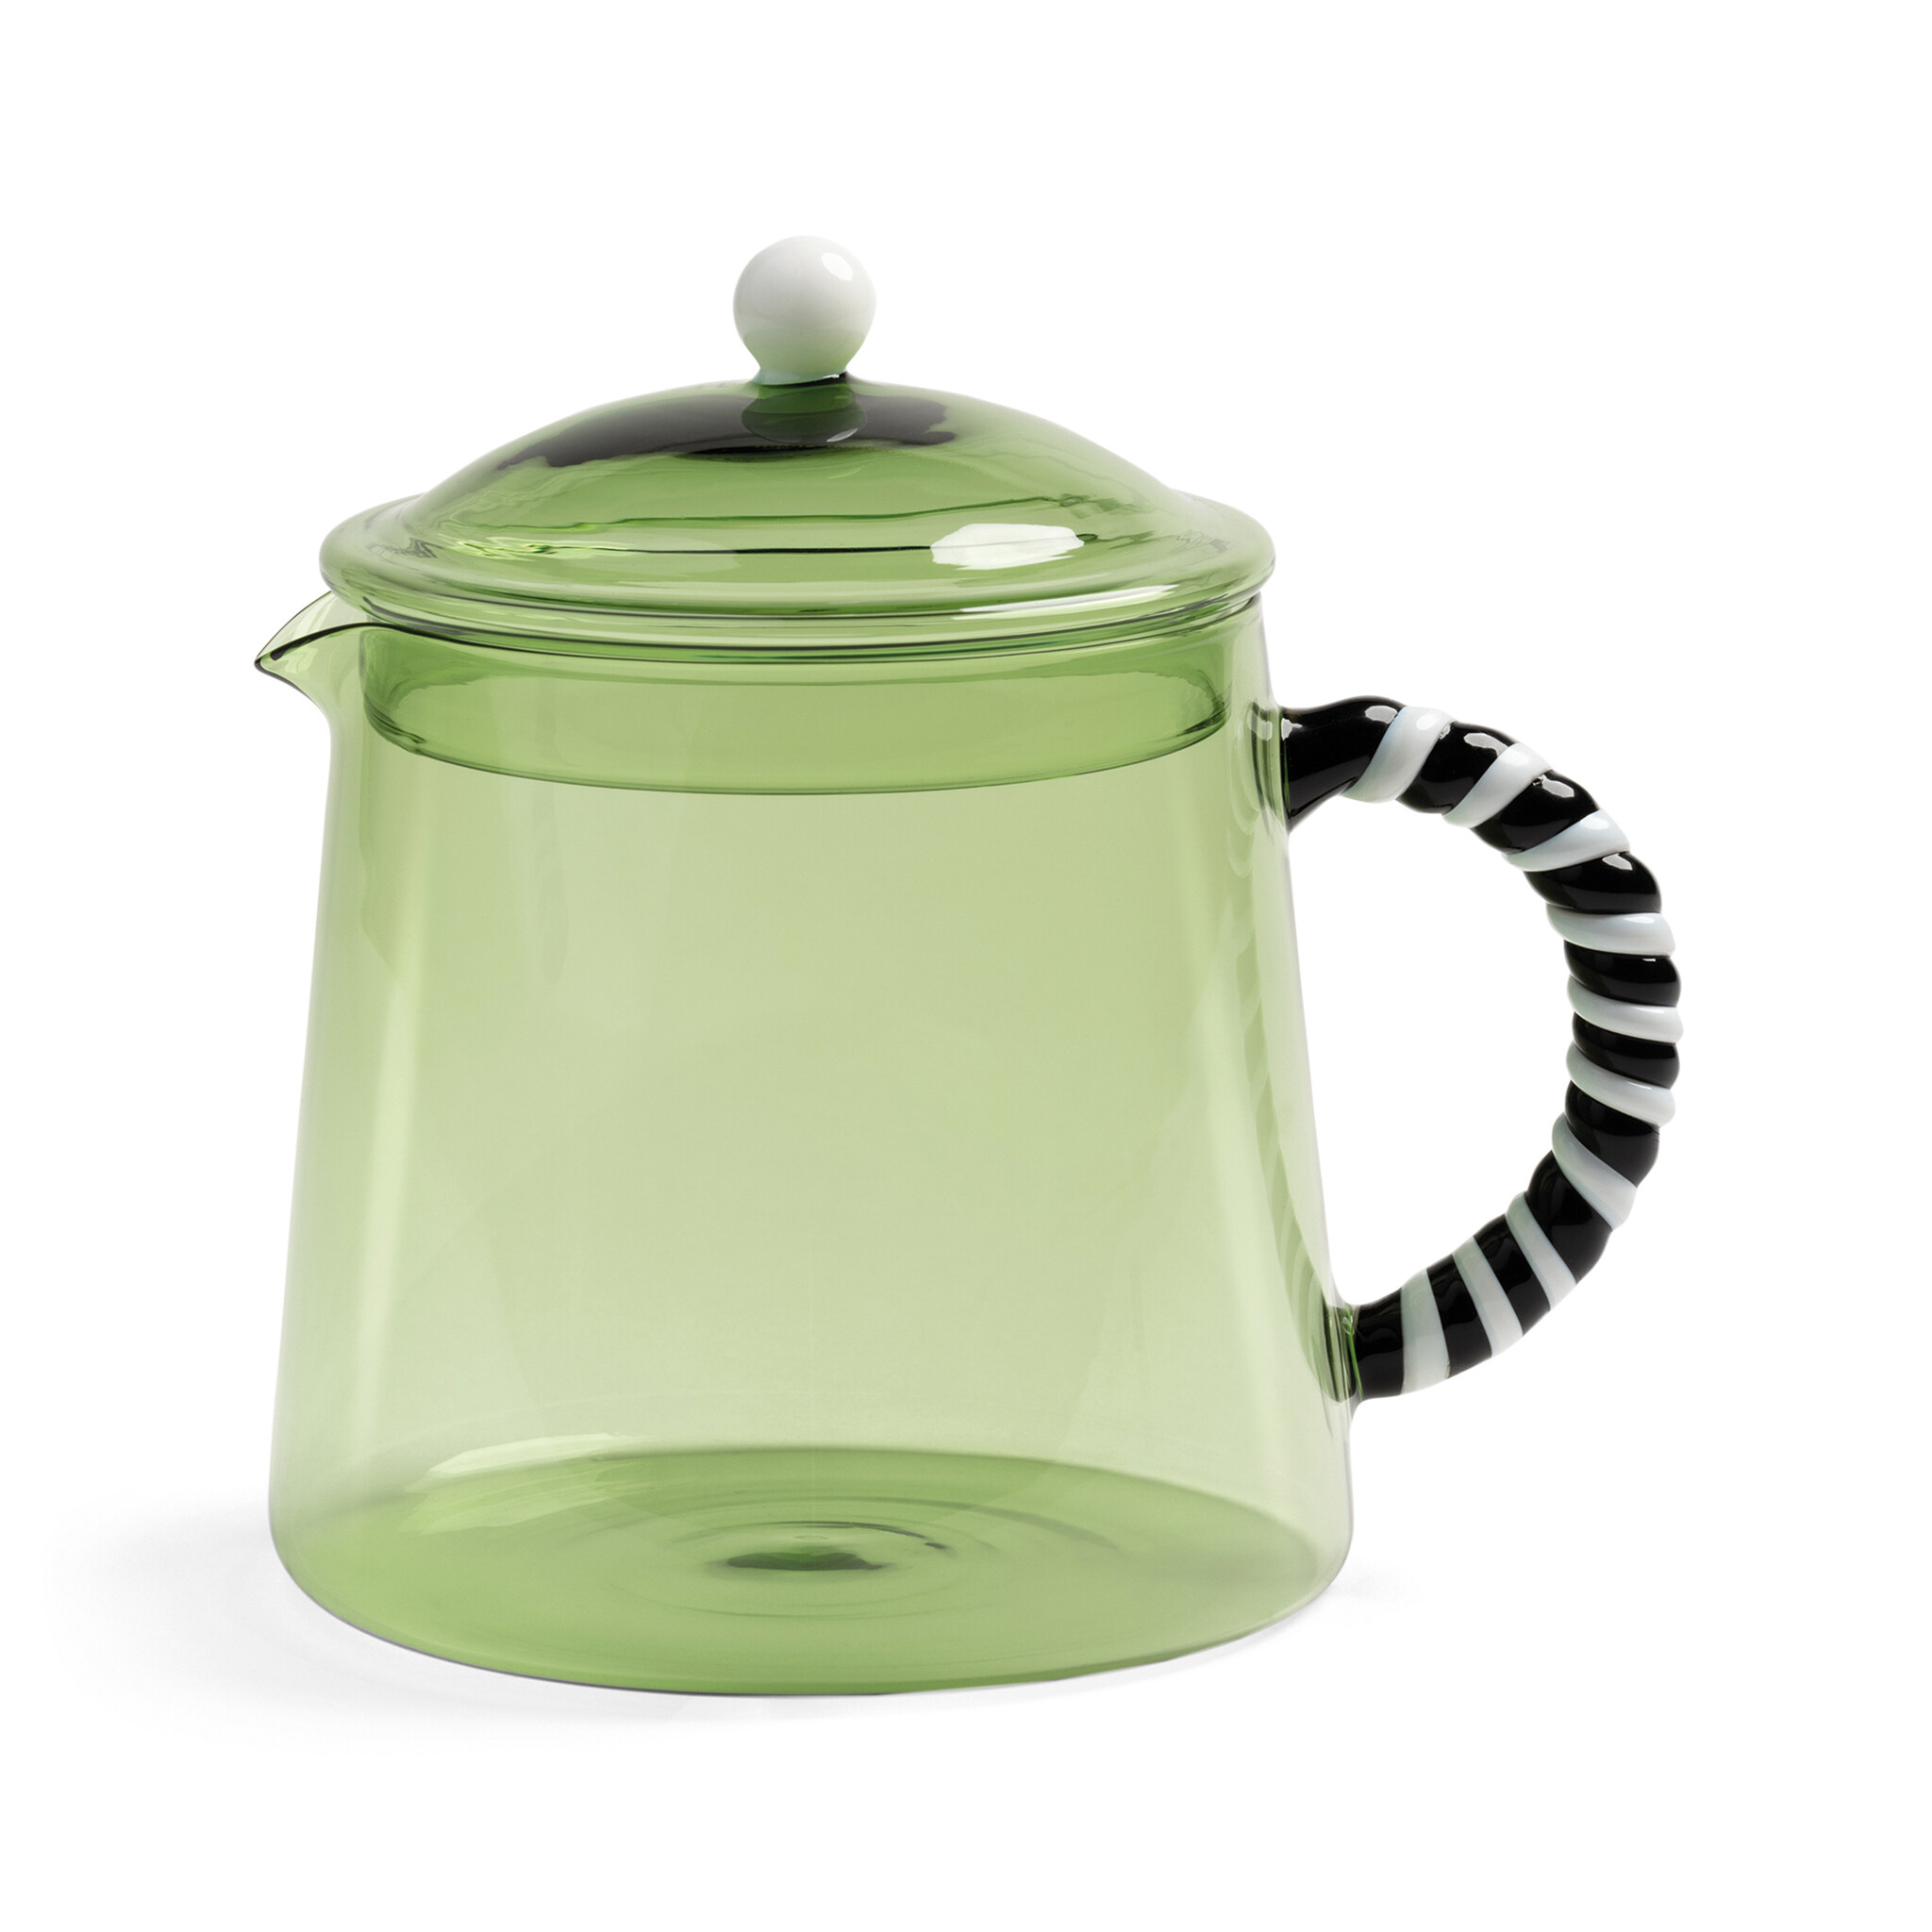 andklevering-teapot-duet-green